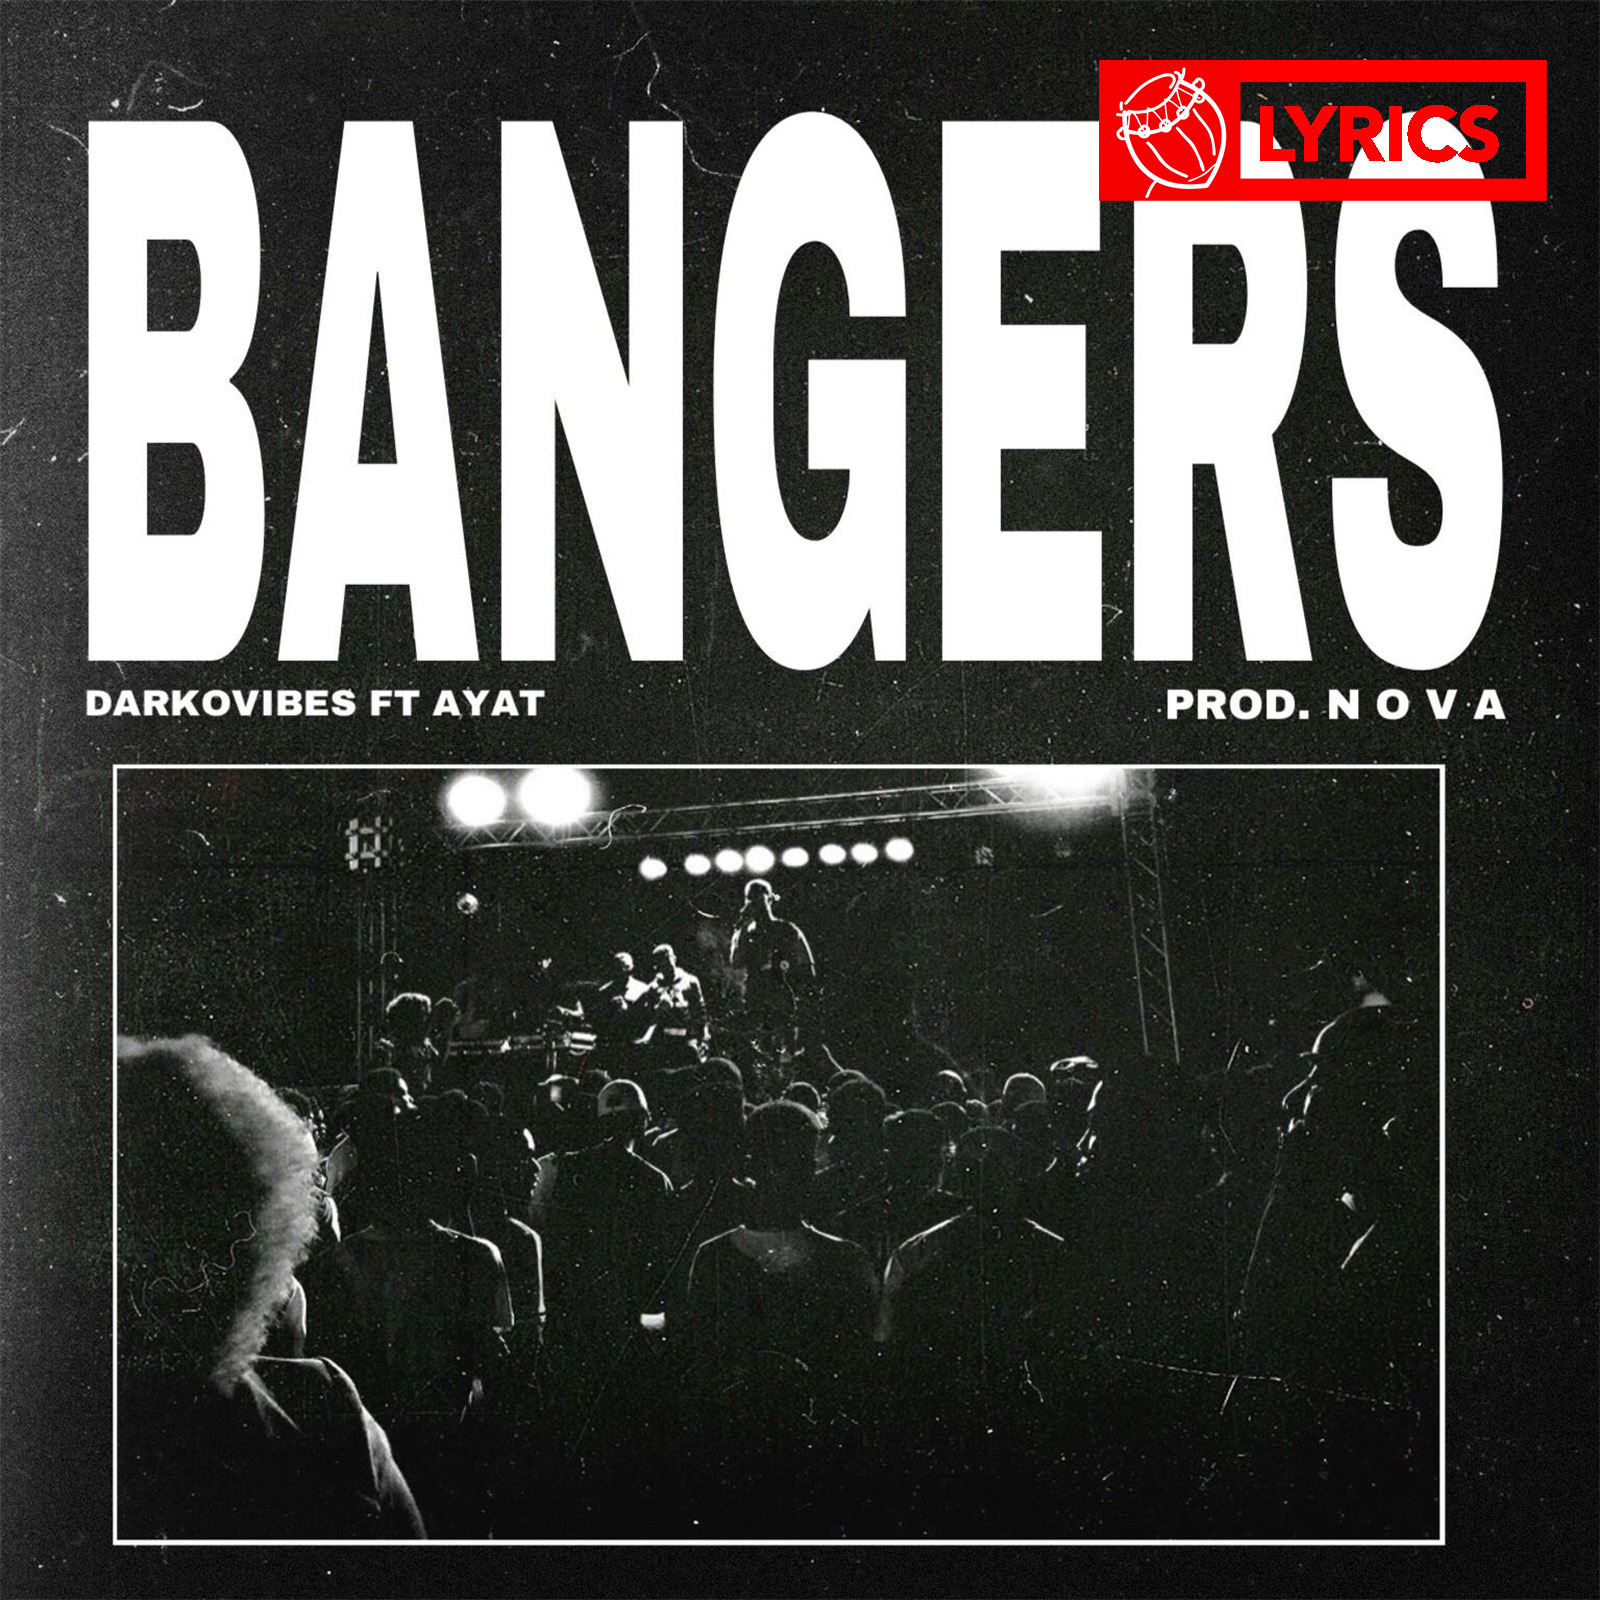 Lyrics: Bangers by Darkovibes feat AYAT